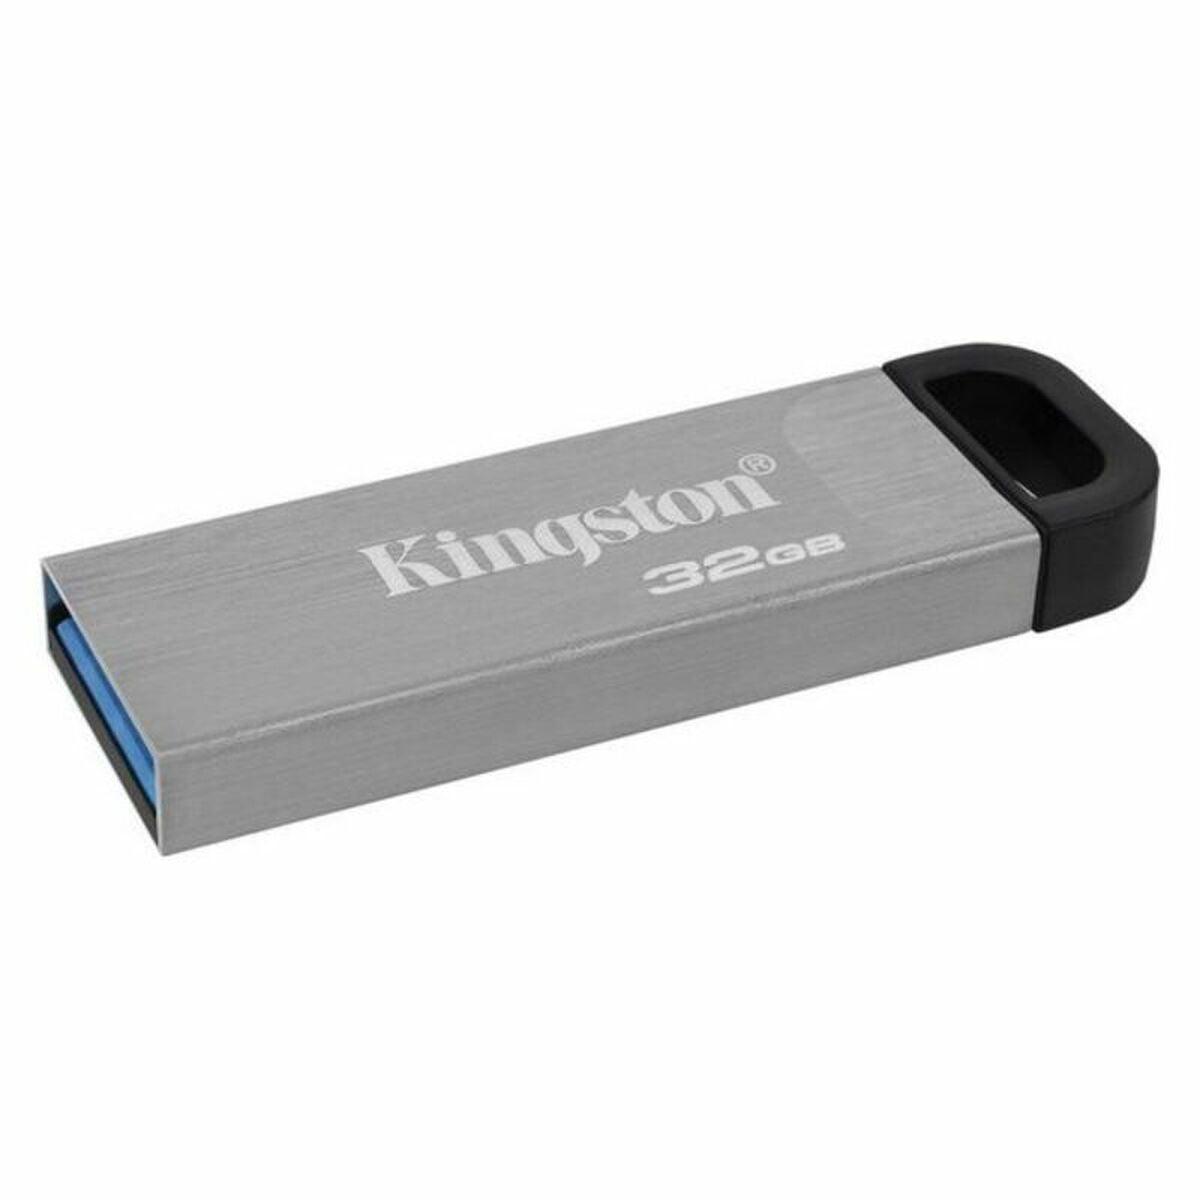 USB stick Kingston DataTraveler DTKN Silver USB stick - Sterilamo